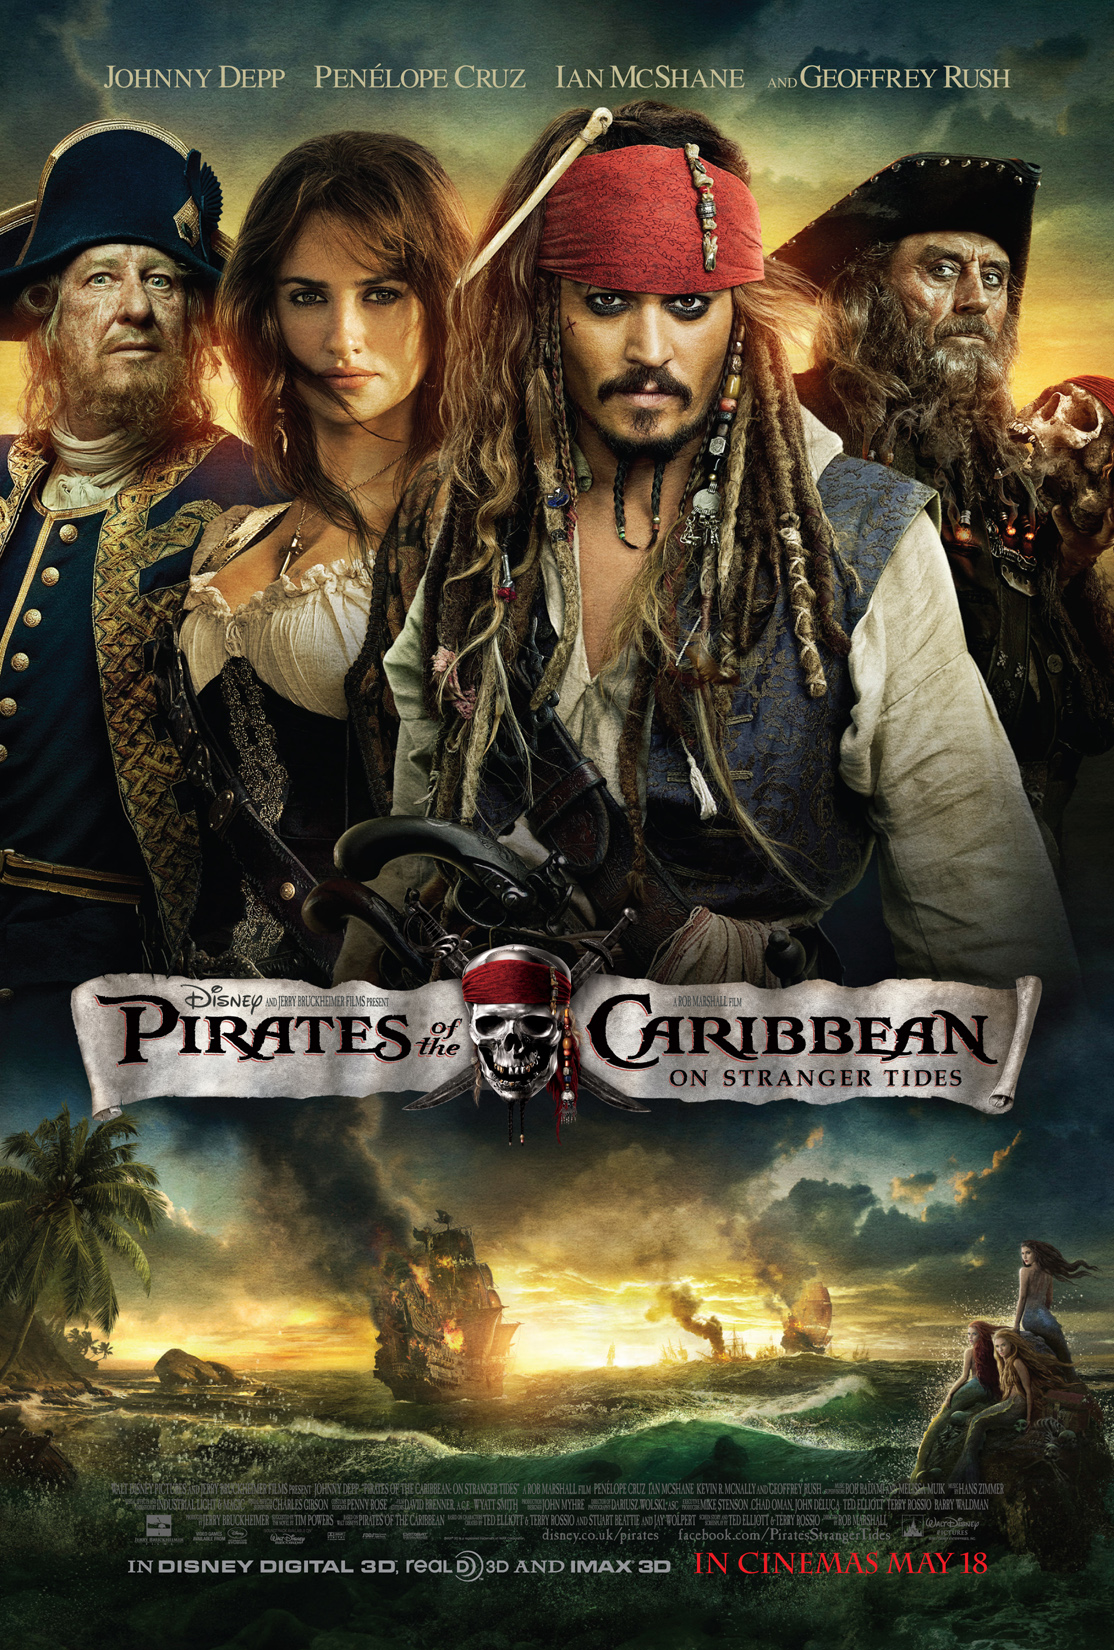 Pirates of the Caribbean: on stranger tides (2011) 4K quality